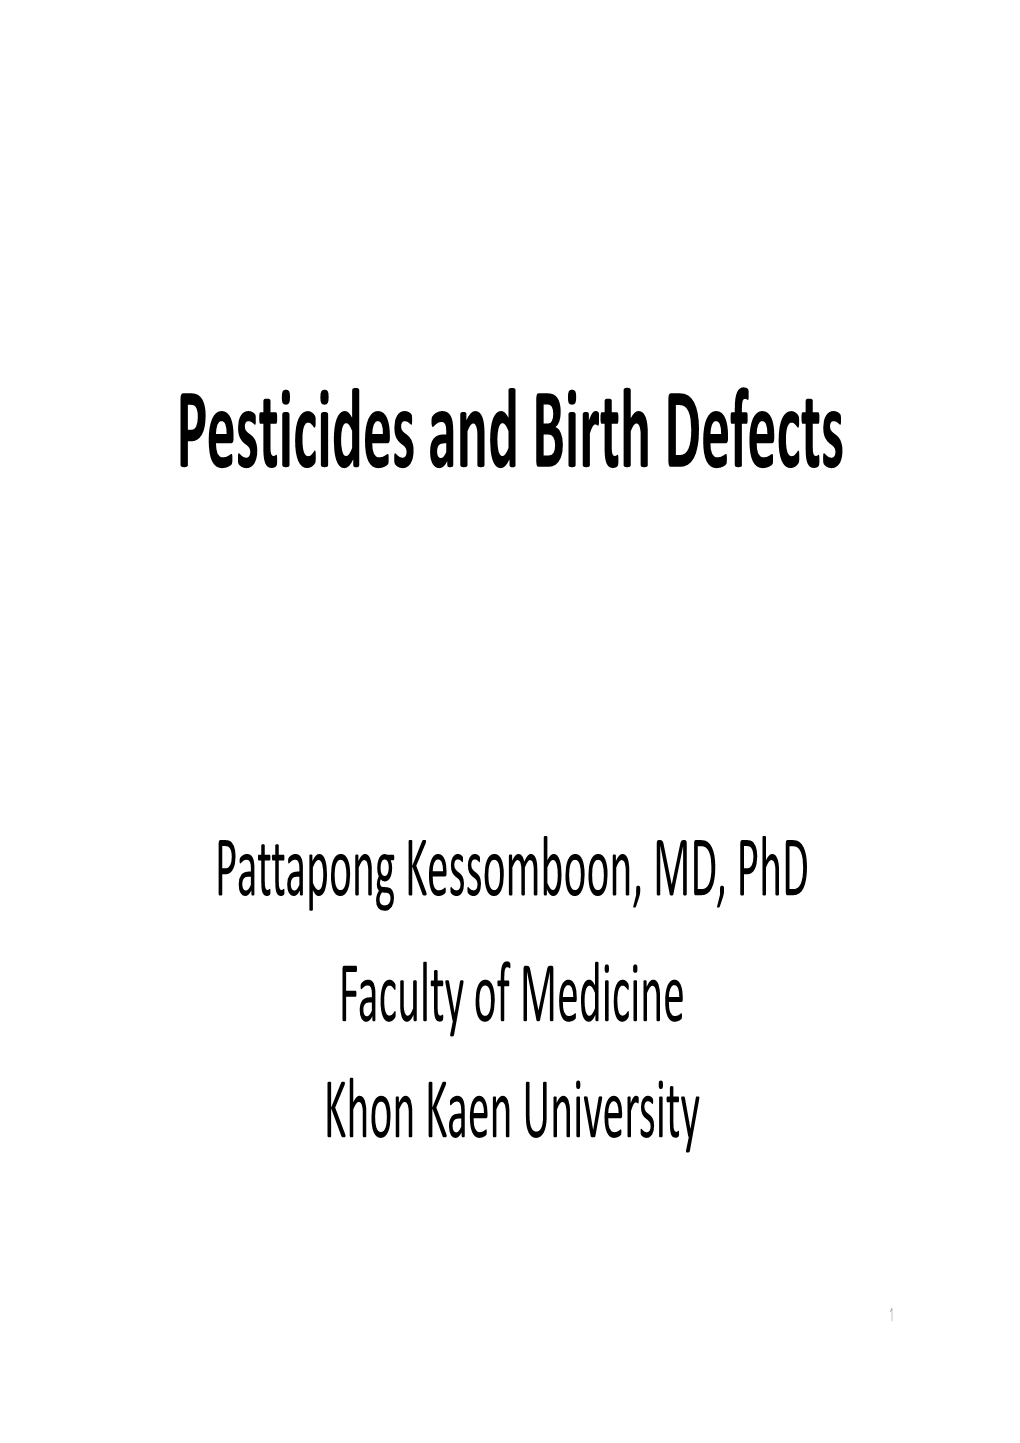 Pesticides and Birth Defects 2016-08-09 ภาษาไทย ที่ Thai-PAN